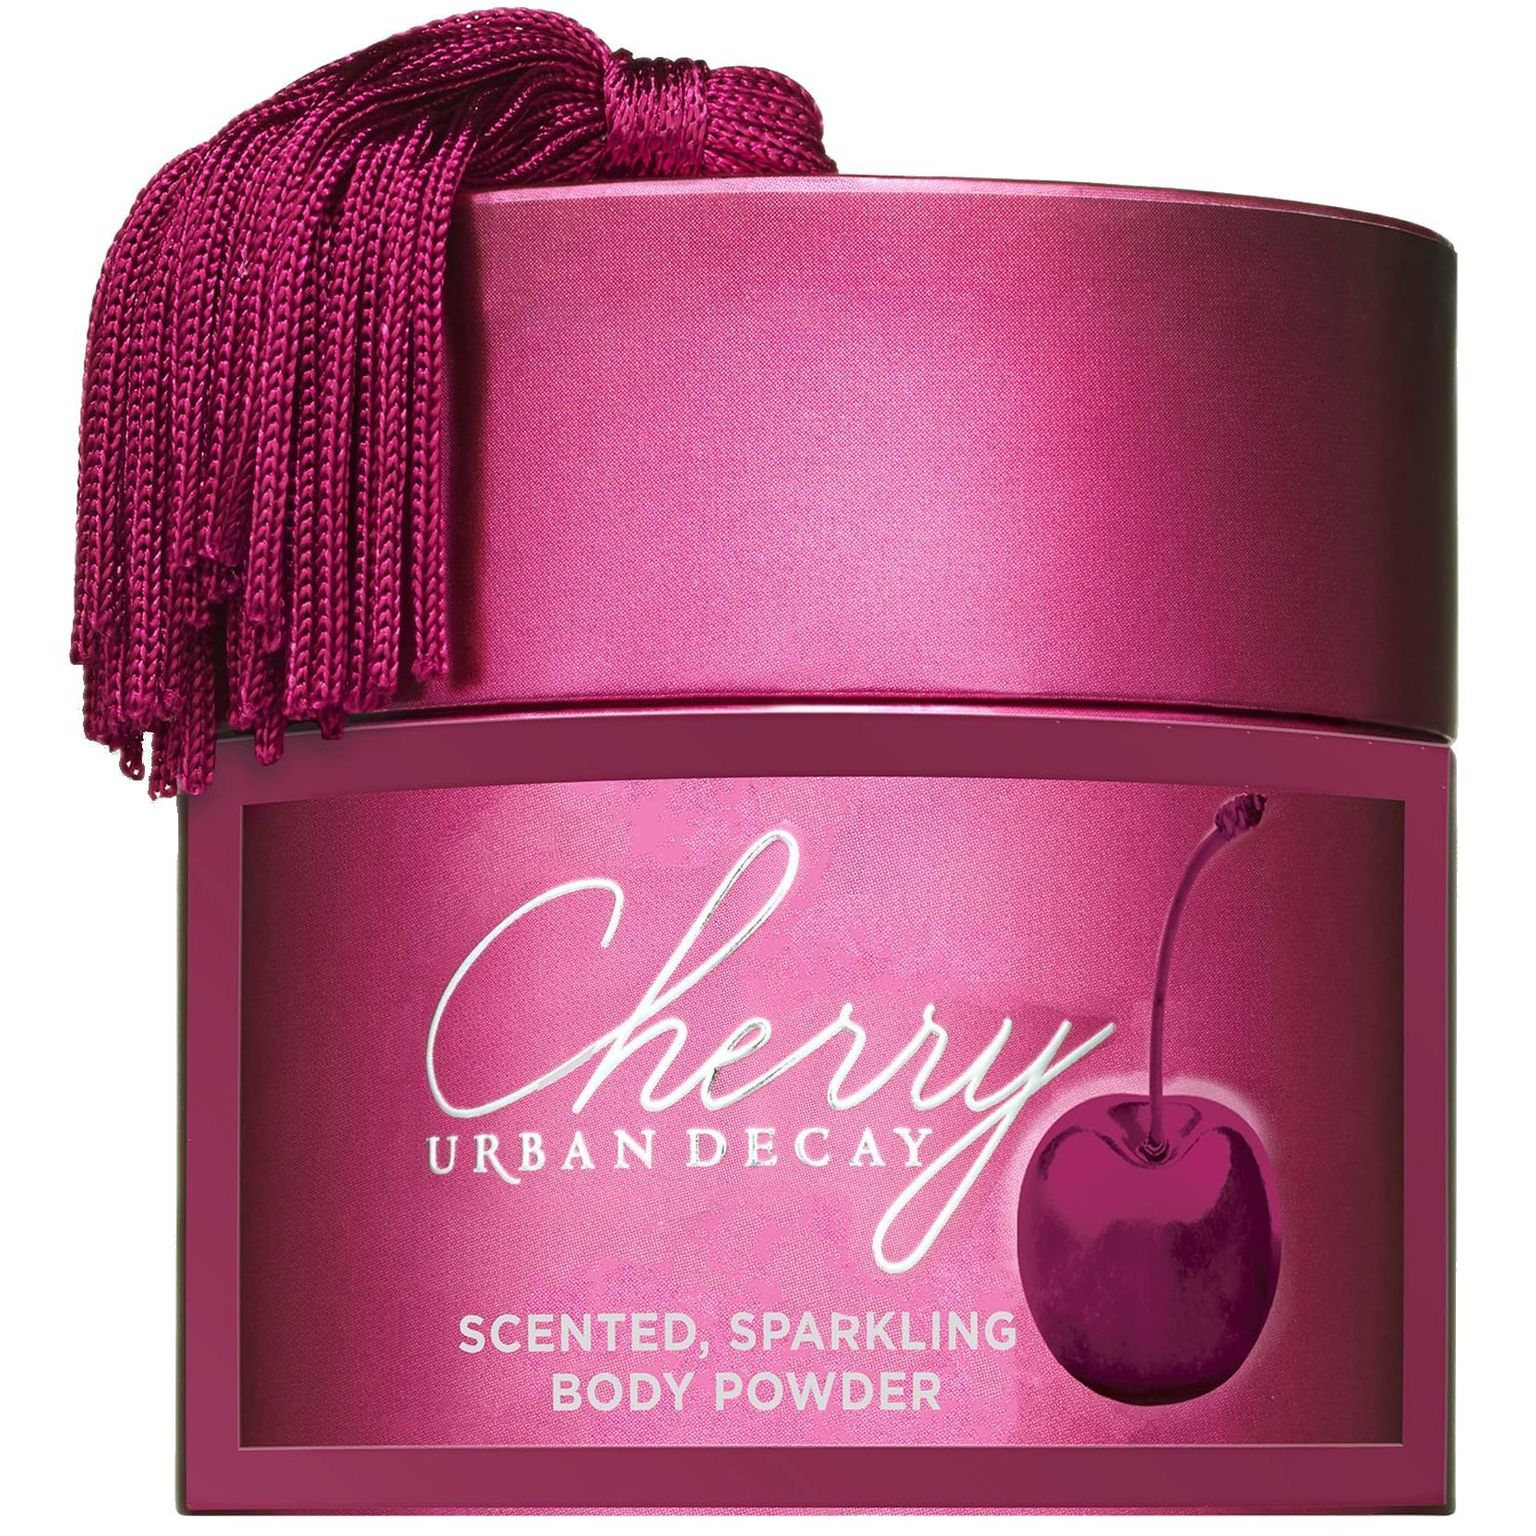 URBAN DECAY-Cherry Scented Sparkling Body Powder